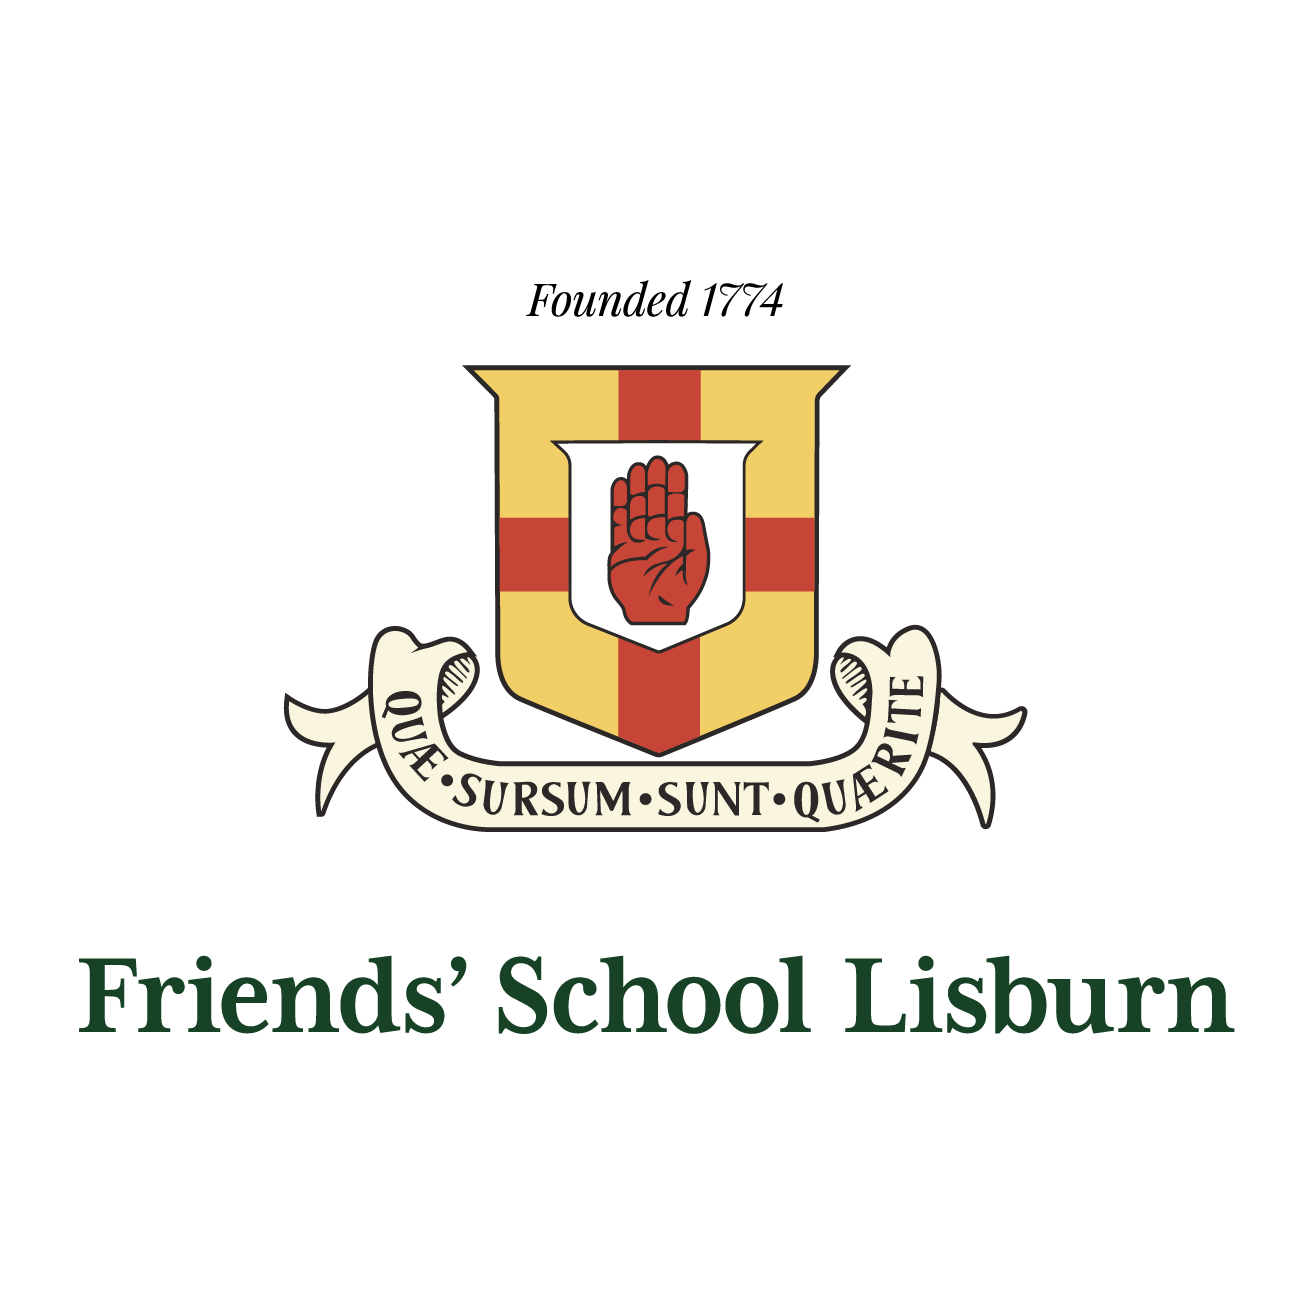 Friends’ School Lisburn